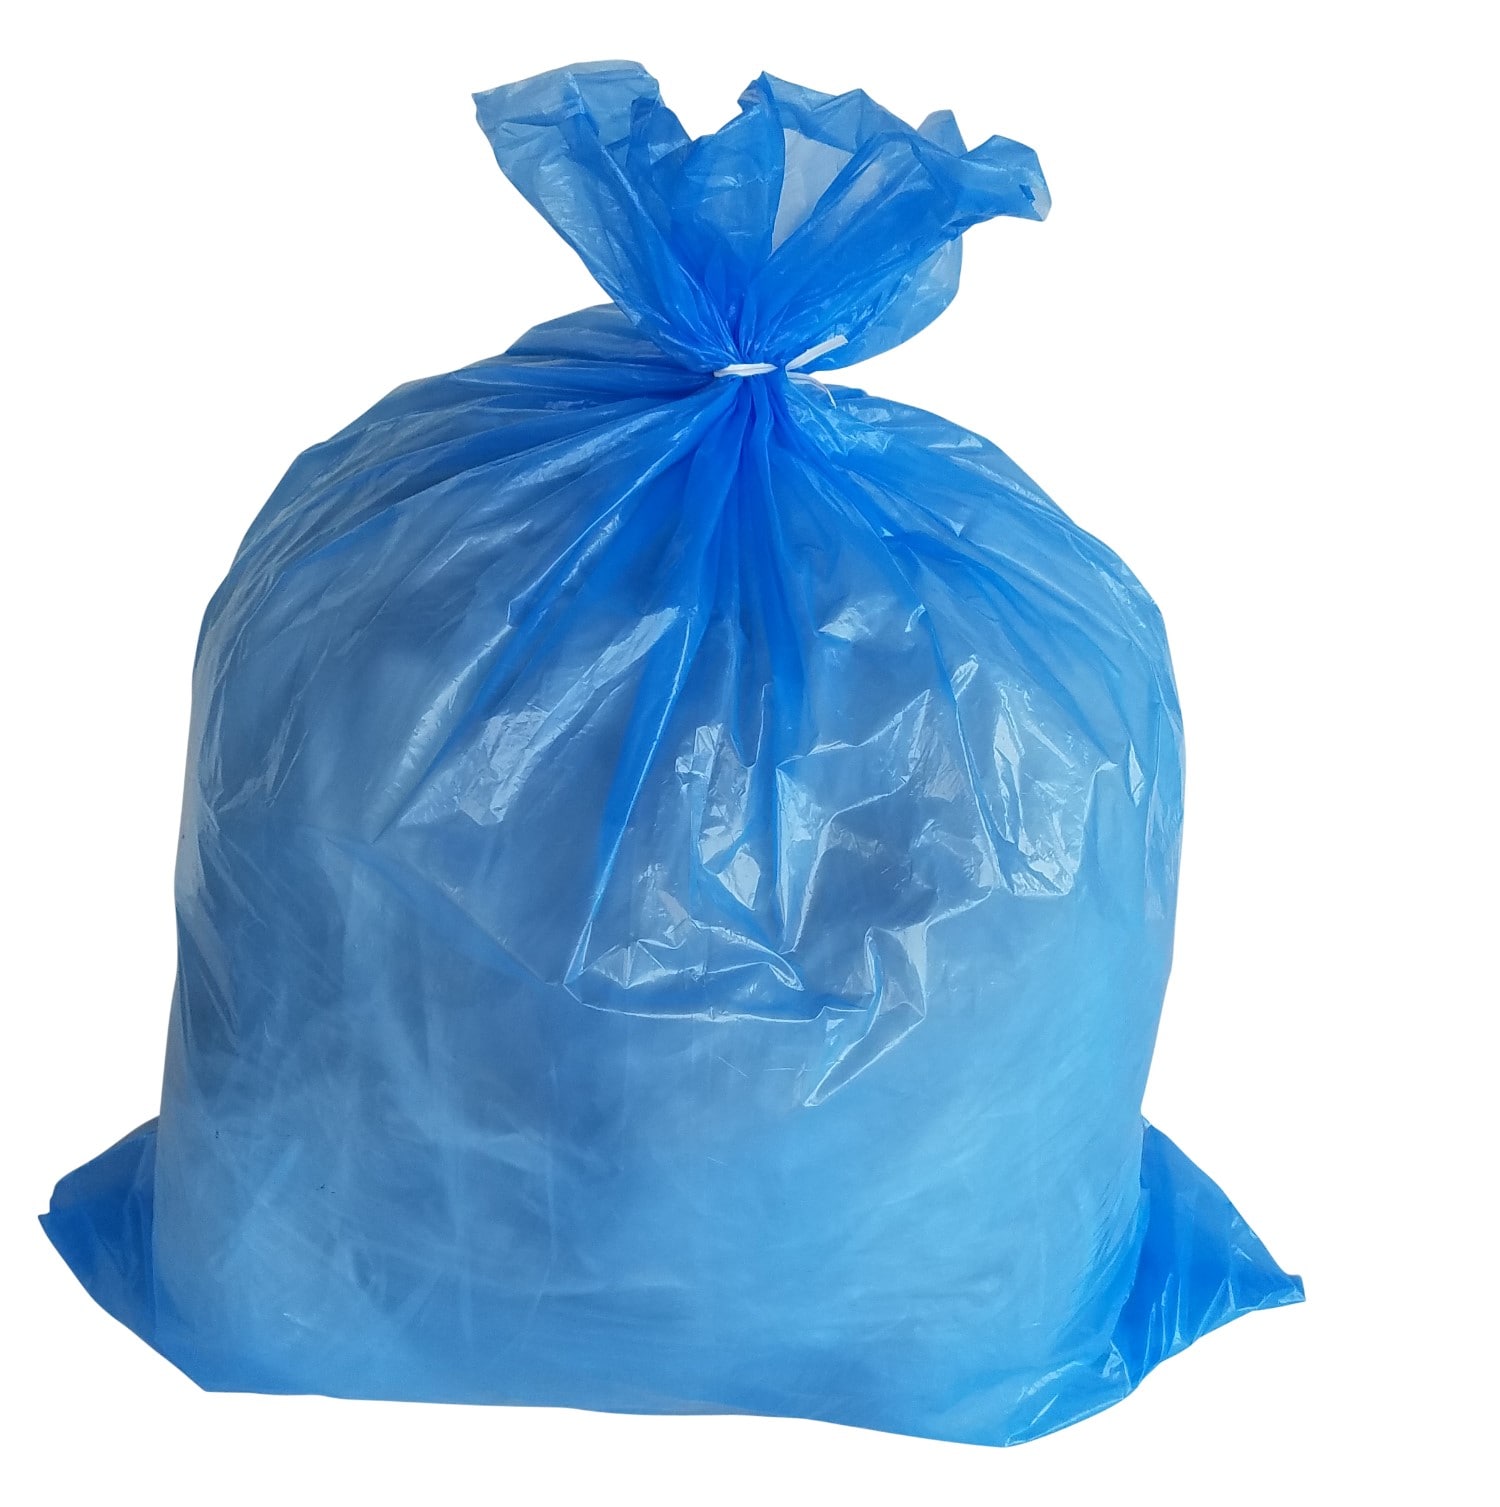 SuperValue 16-25 Gallon Recycling Bags 120 Count Bulk Blue Trash Bags Details about   Reli 